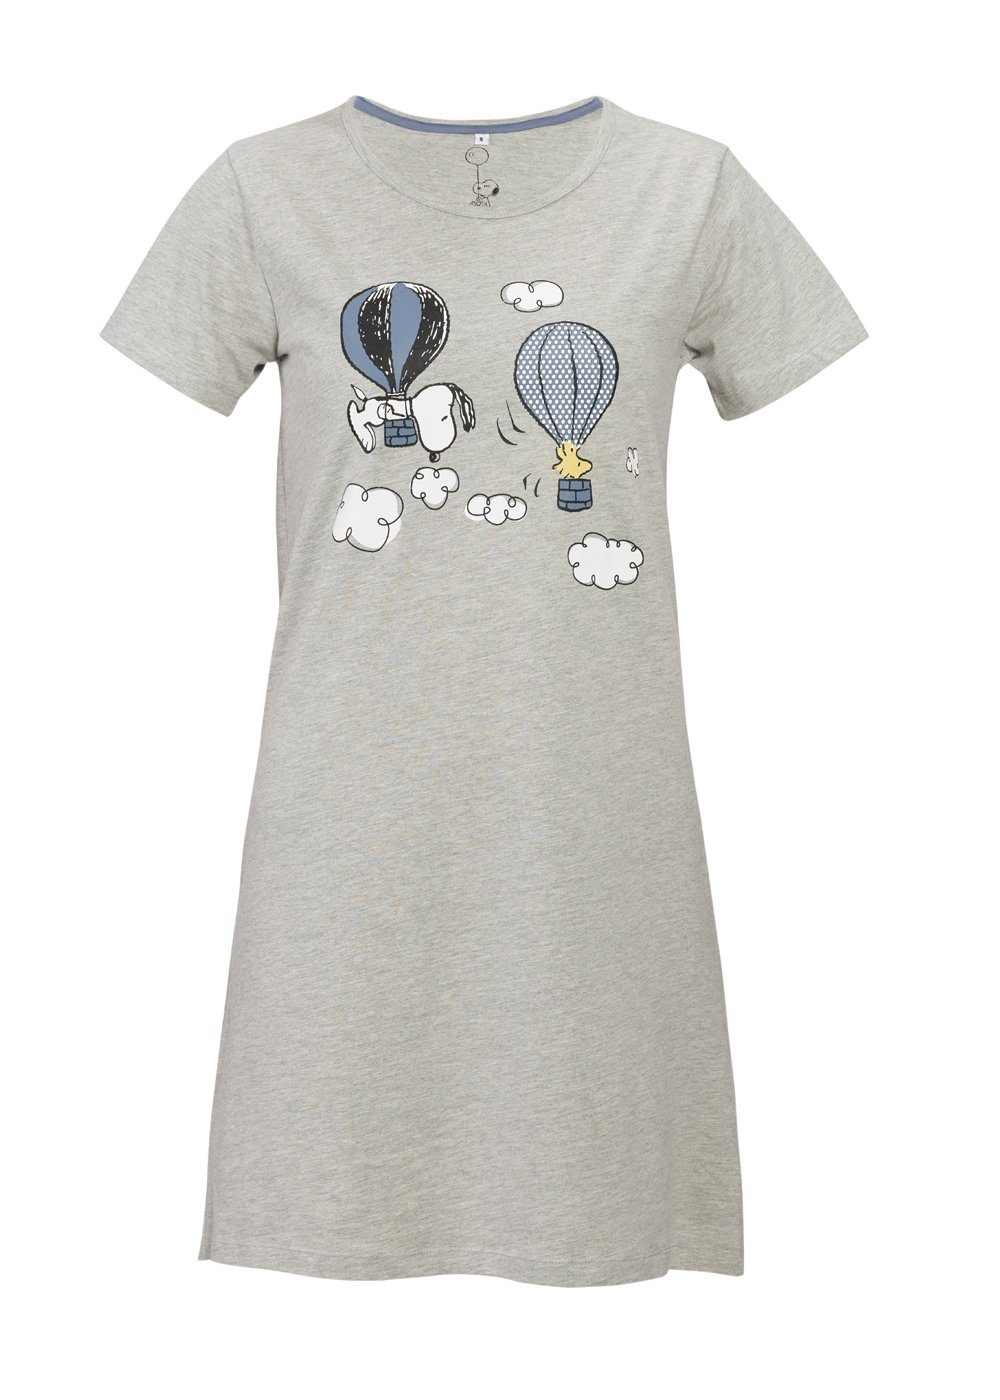 Damen Nacht-Kleid Nachthemd Schlafshirt Snoopy ONOMATO! Peanuts